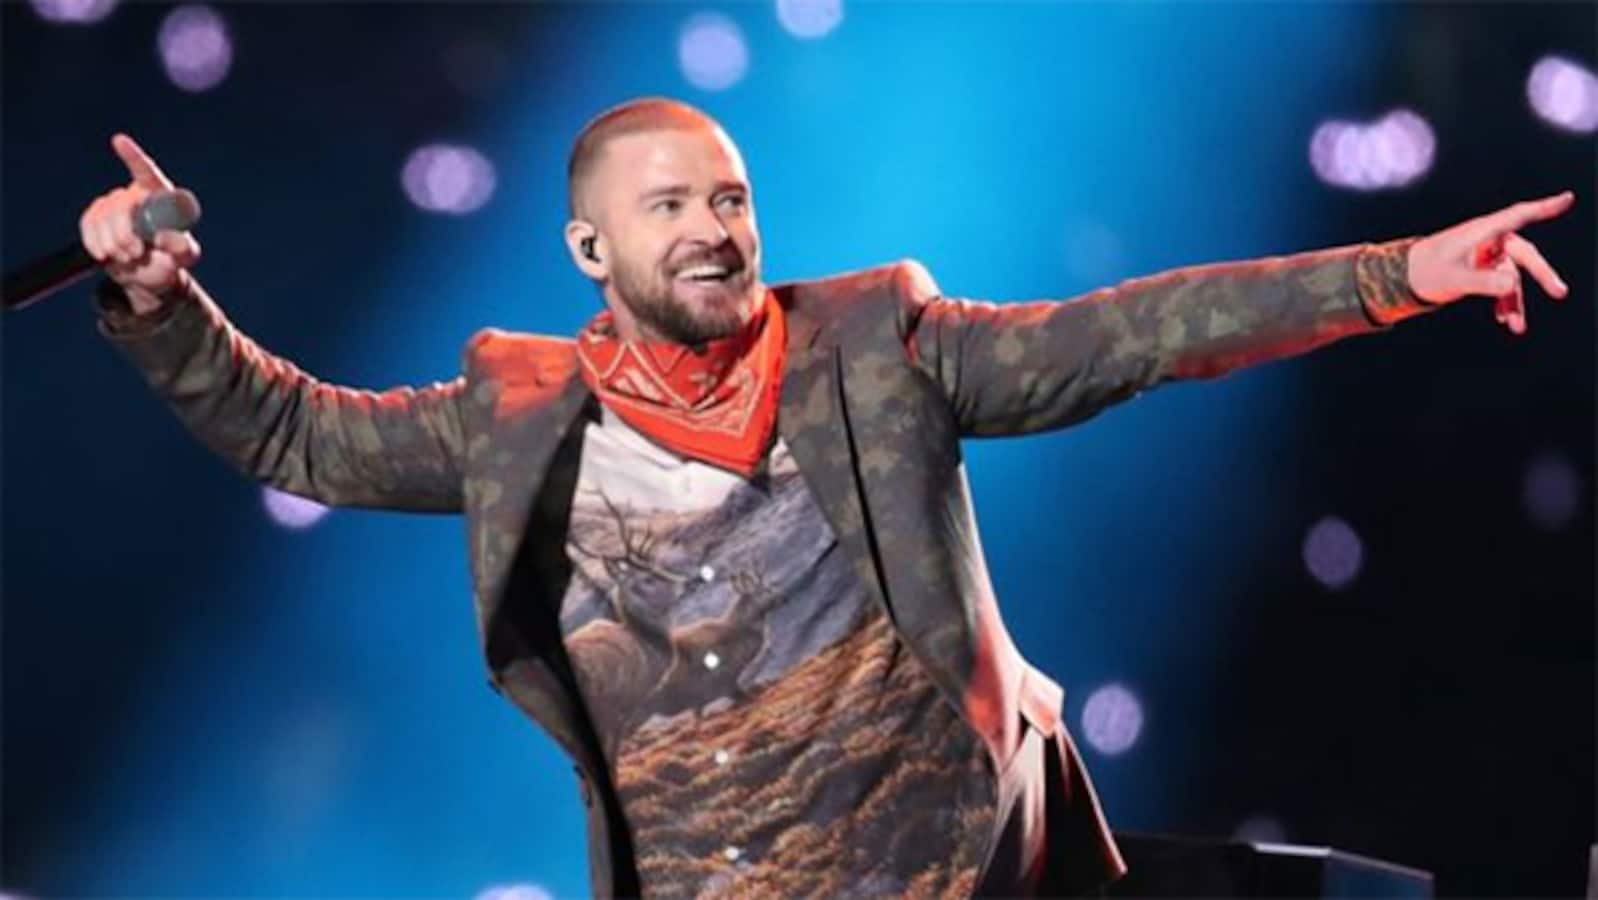 Justin Timberlake honours late Minnesota native Prince at Super Bowl 2018